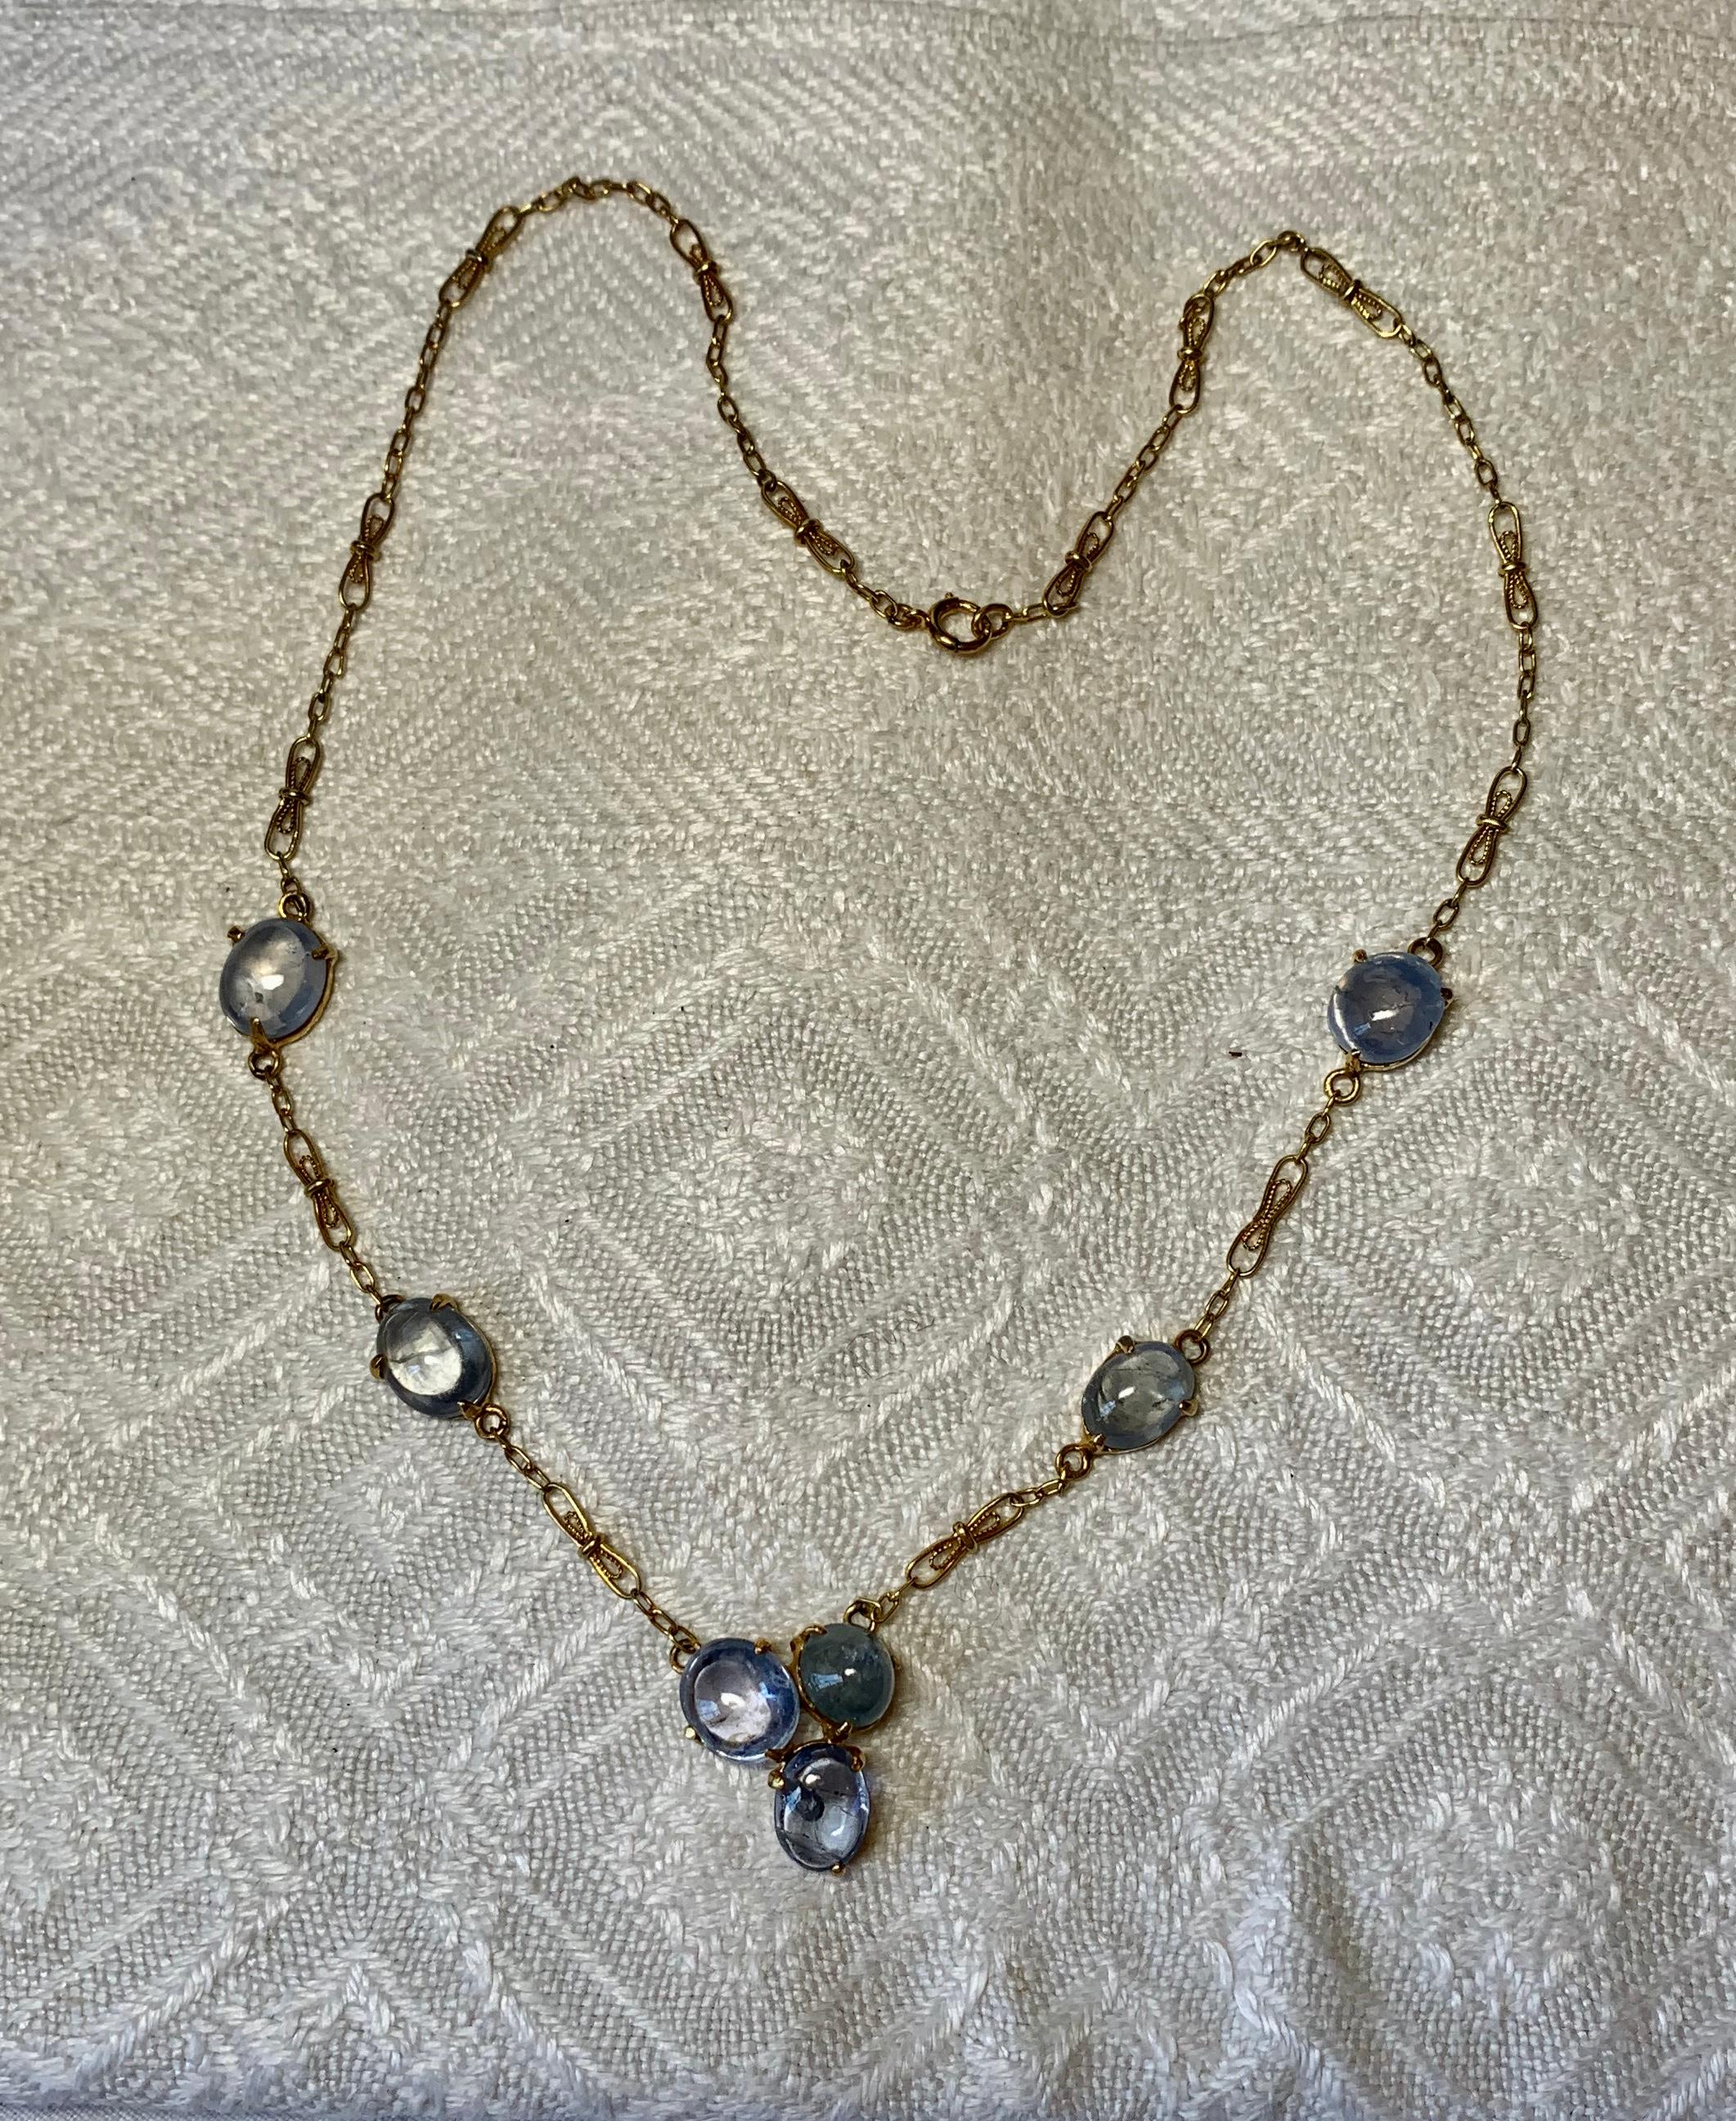 Oval Cut Victorian 25 Carat Sapphire Necklace 14 Karat Gold Fetter Link Chain